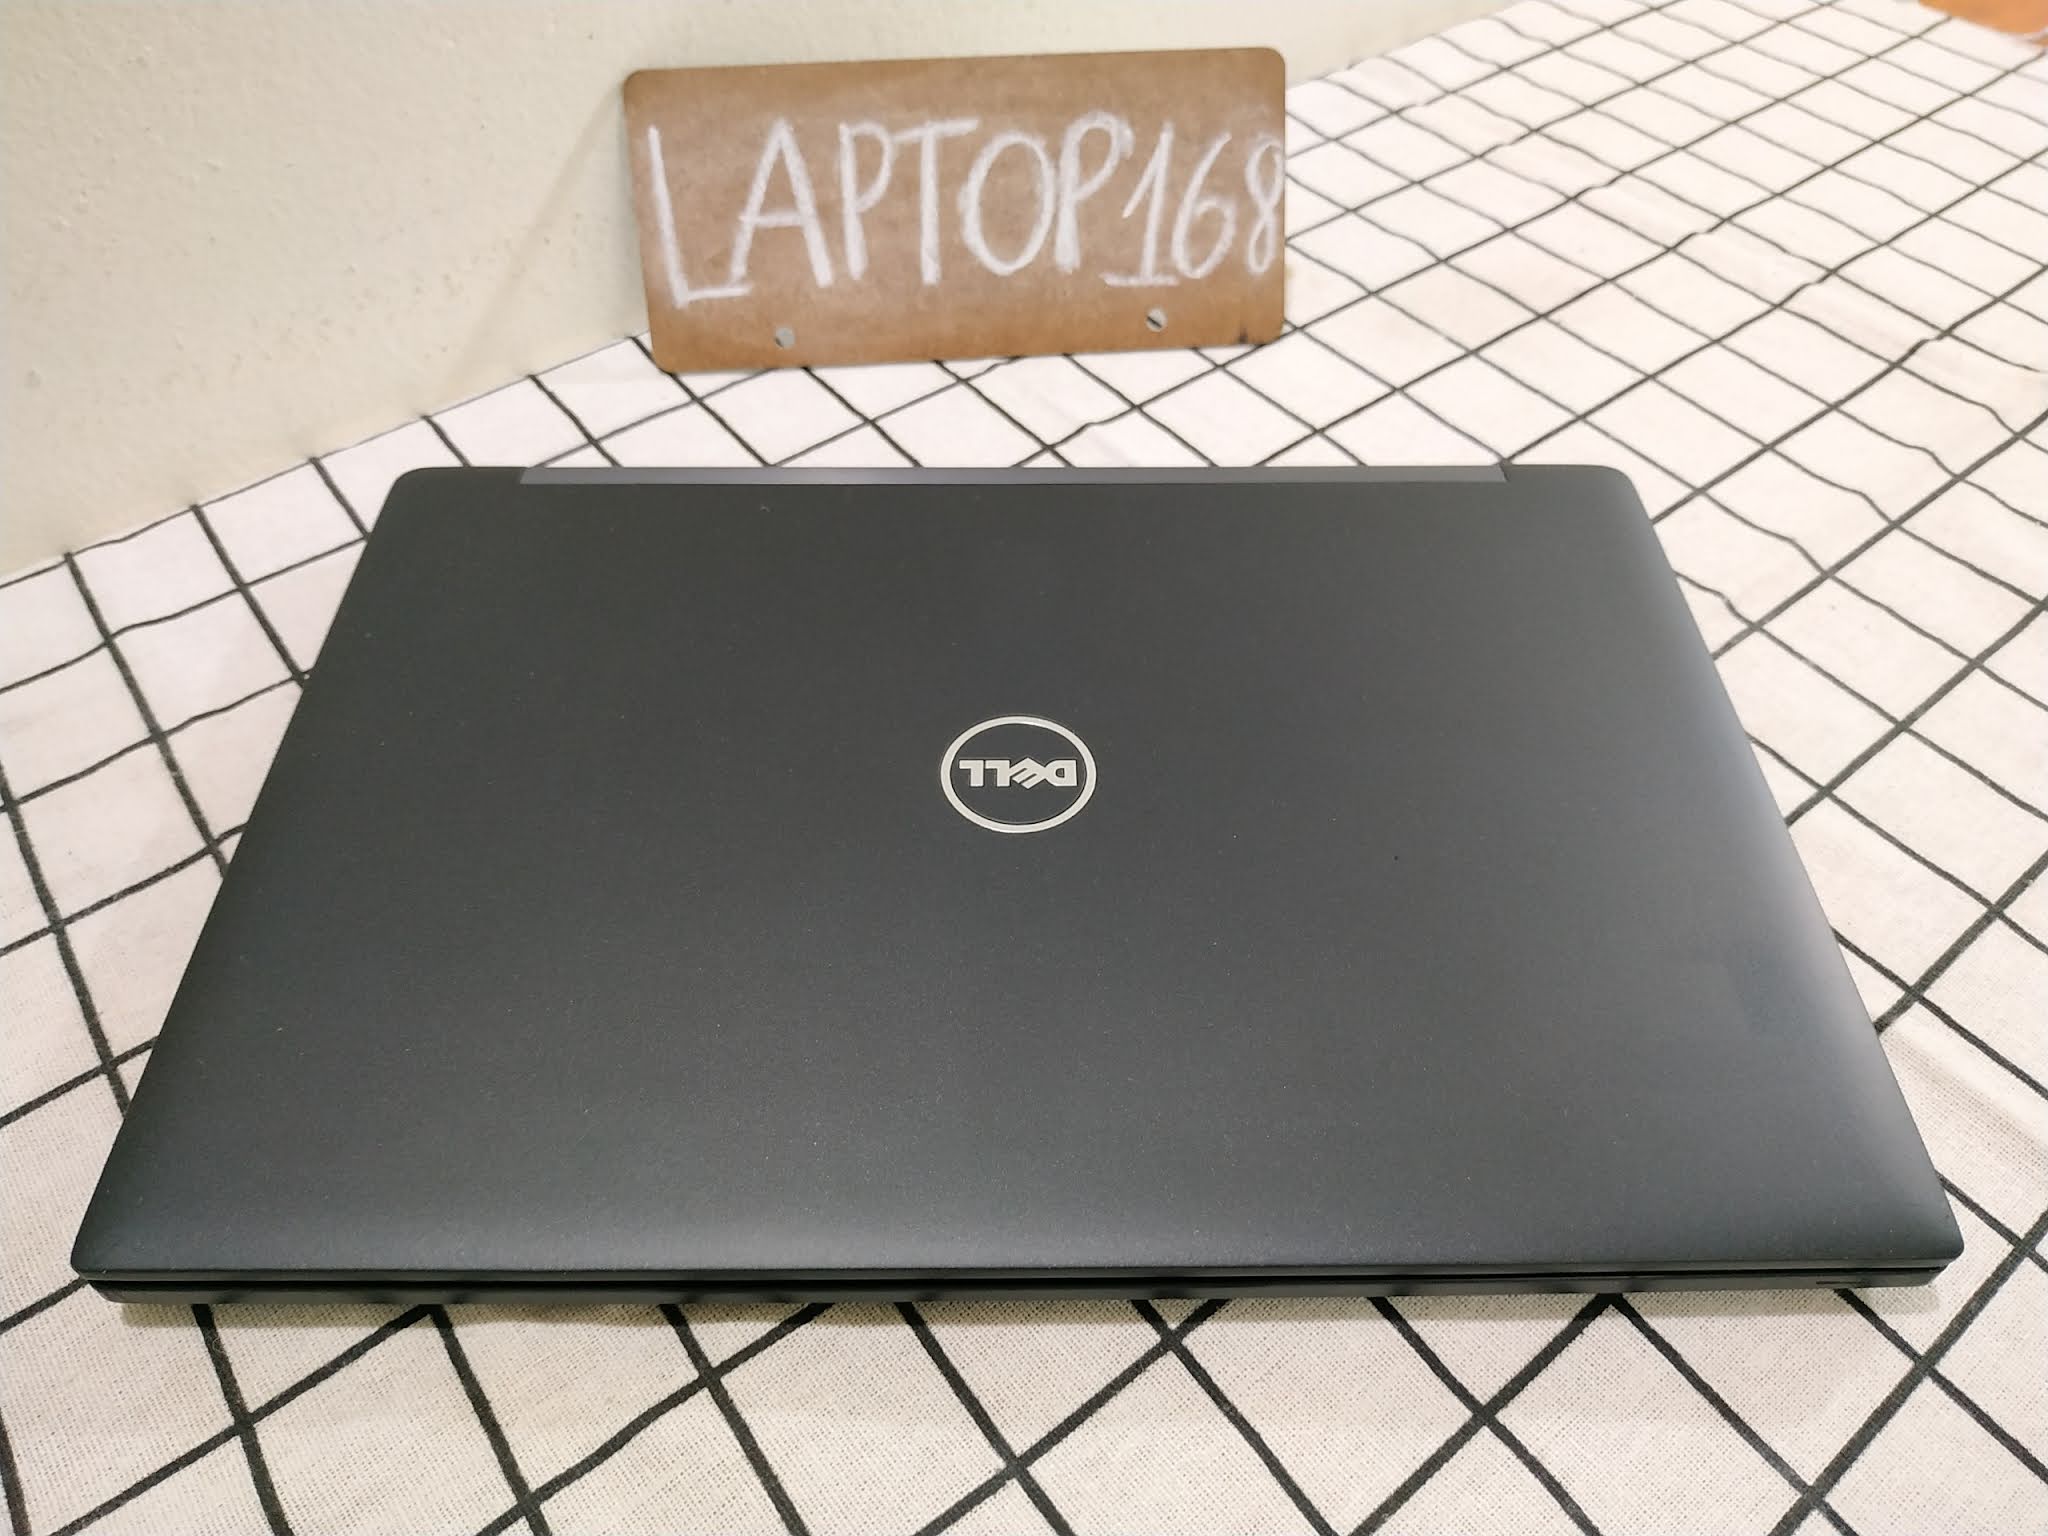 Laptop-cu-Dell%2Blatitude%2Be7280-04.jpg